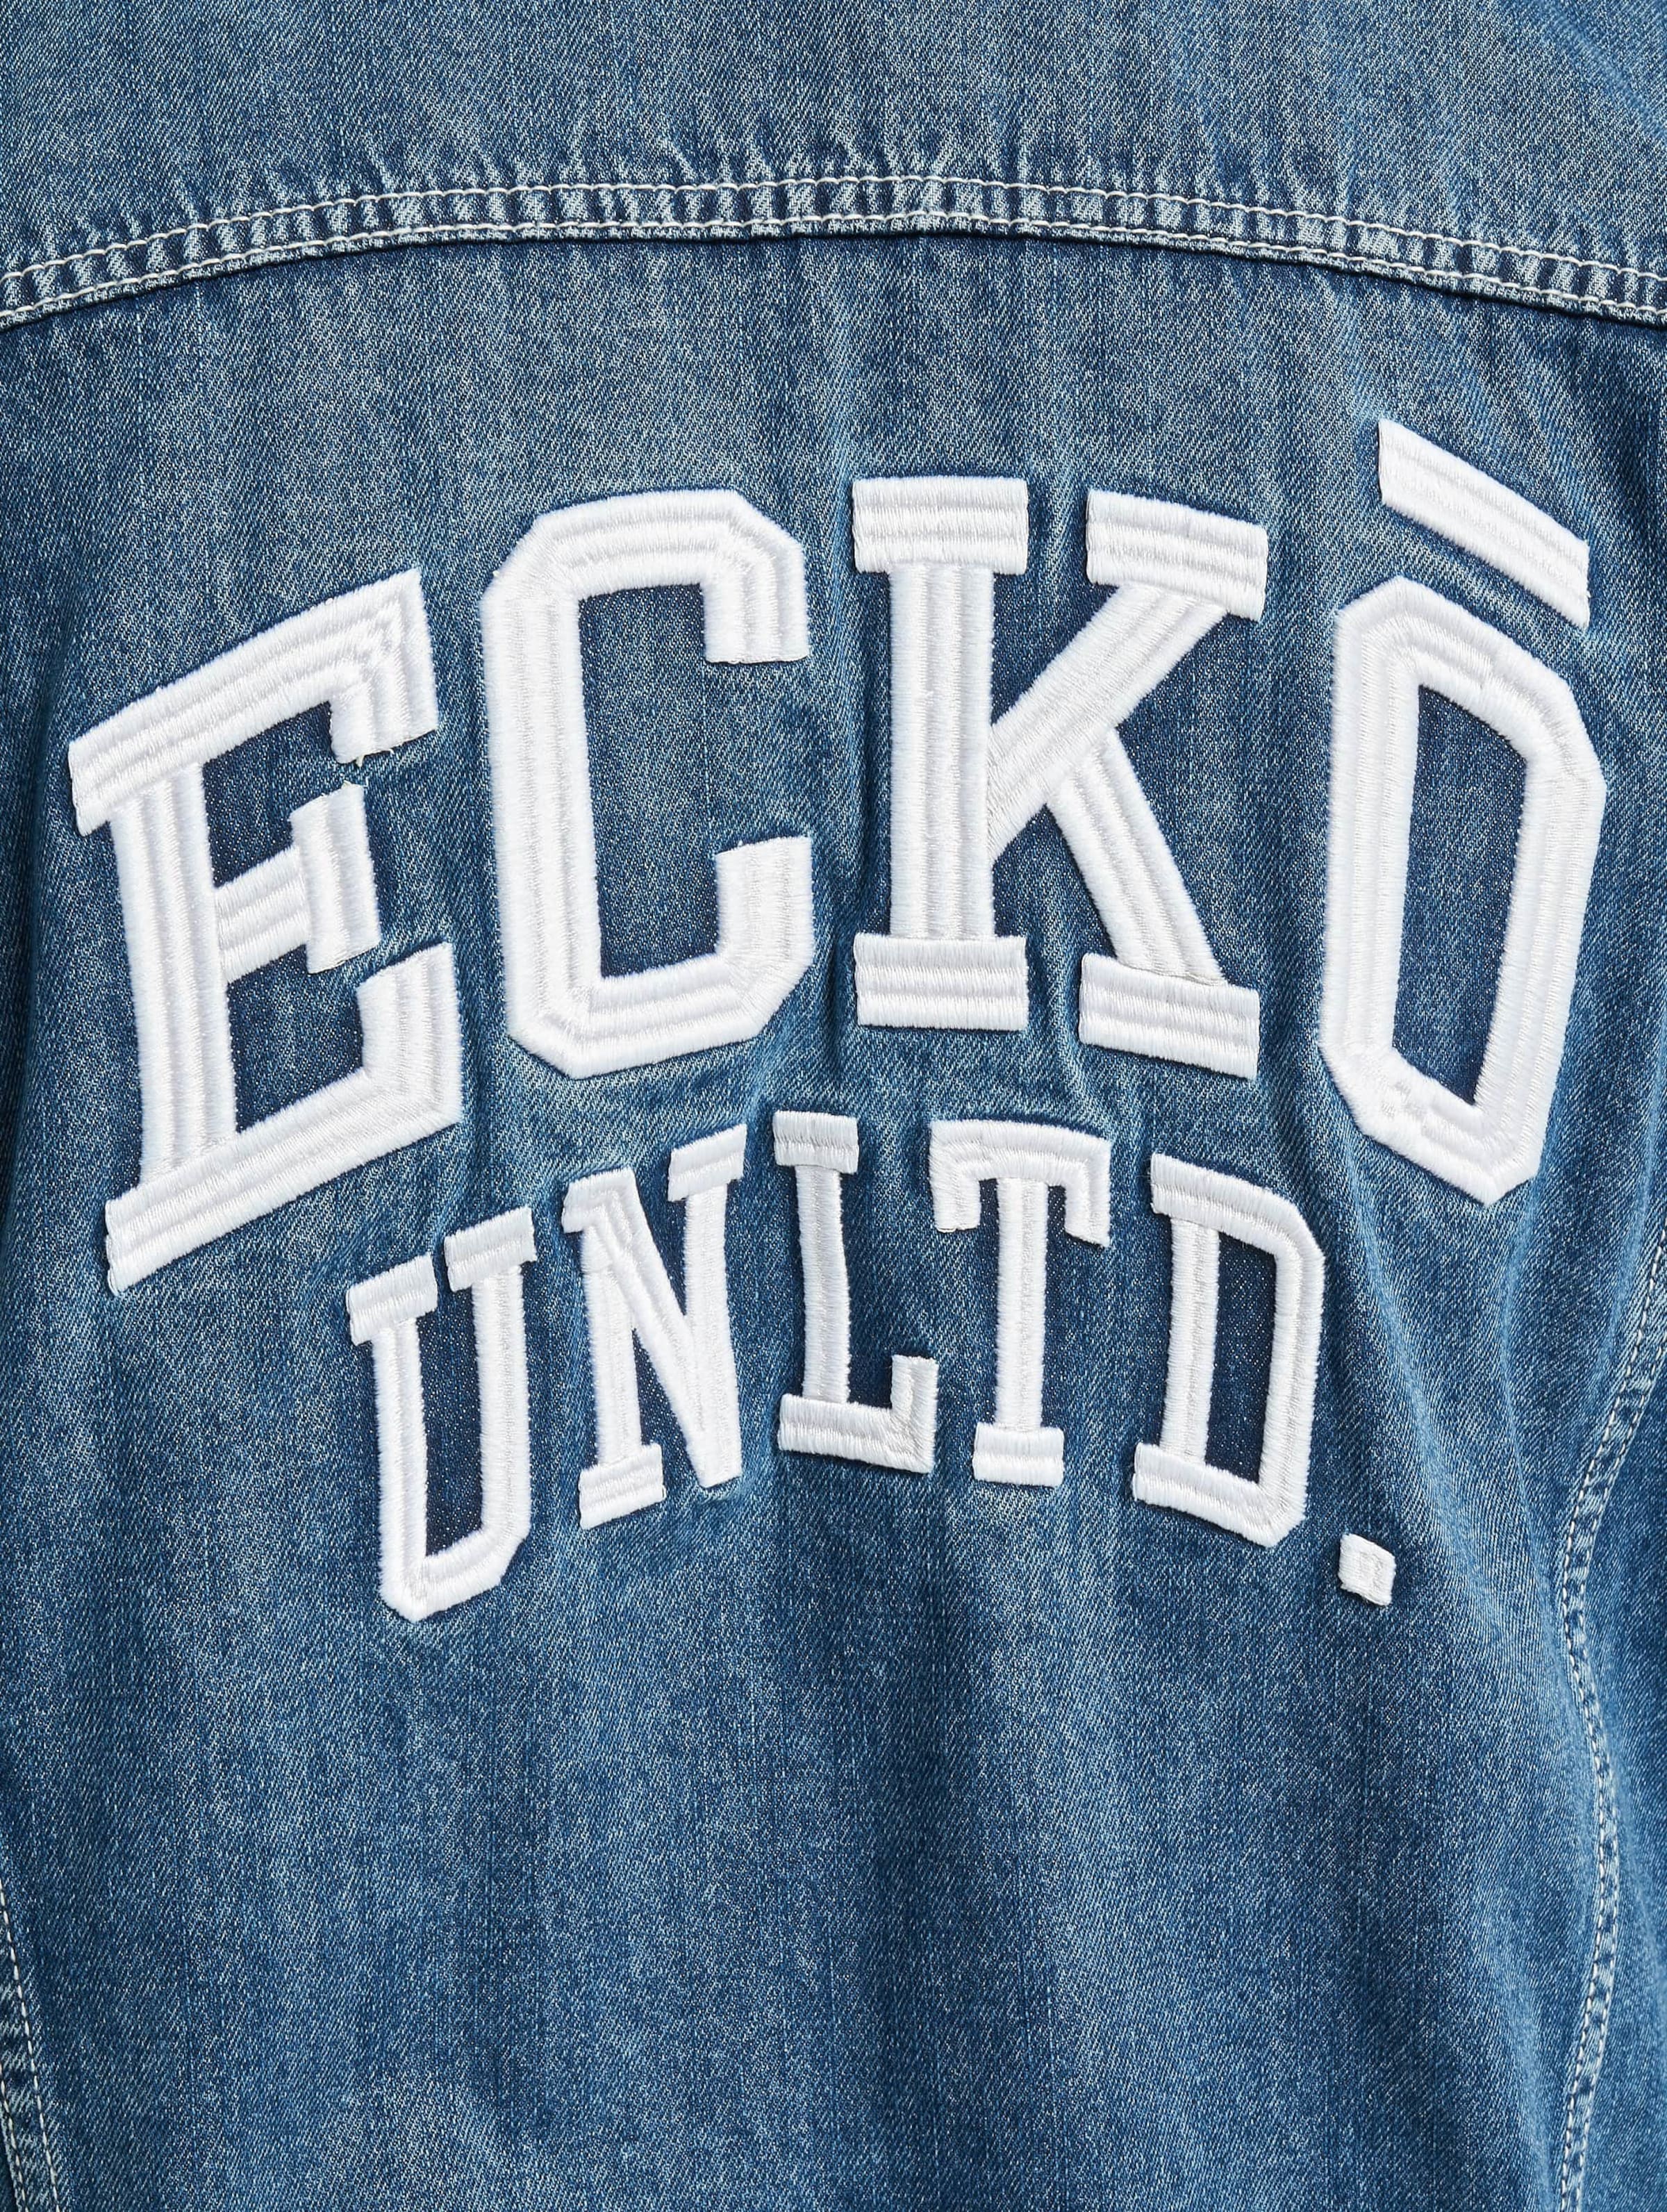 Ecko Unlimited | Jackets & Coats | Eckored Jean Jacket | Poshmark